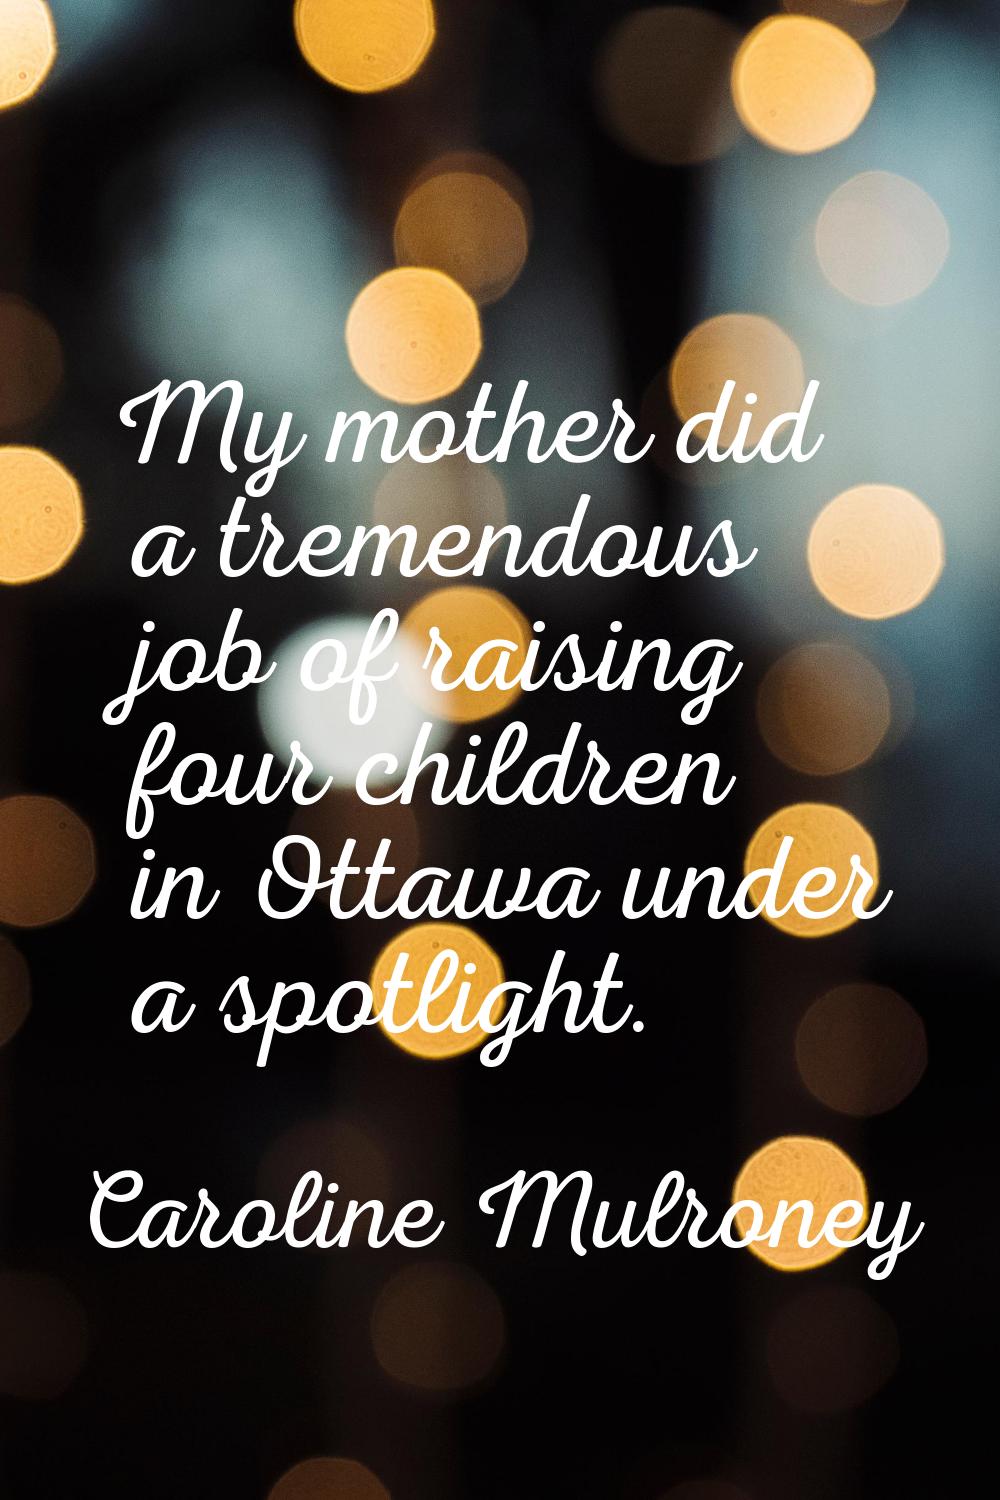 My mother did a tremendous job of raising four children in Ottawa under a spotlight.